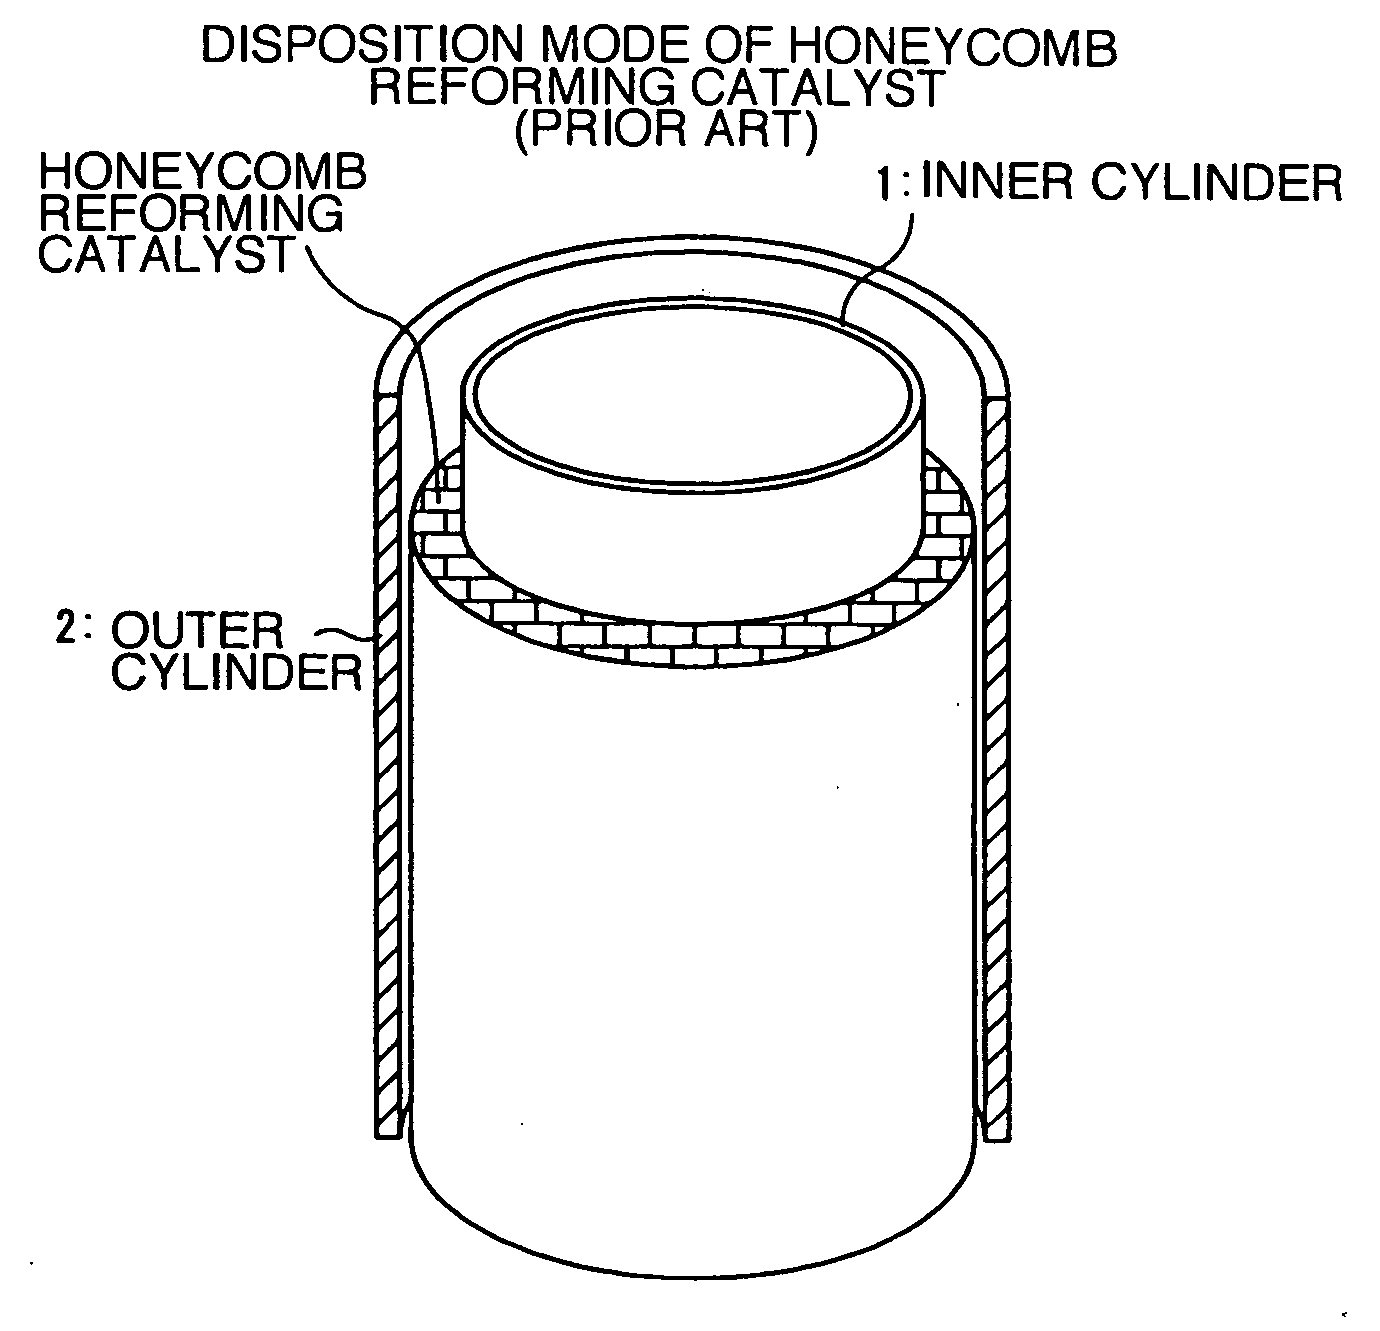 Cylindrical steam reformer